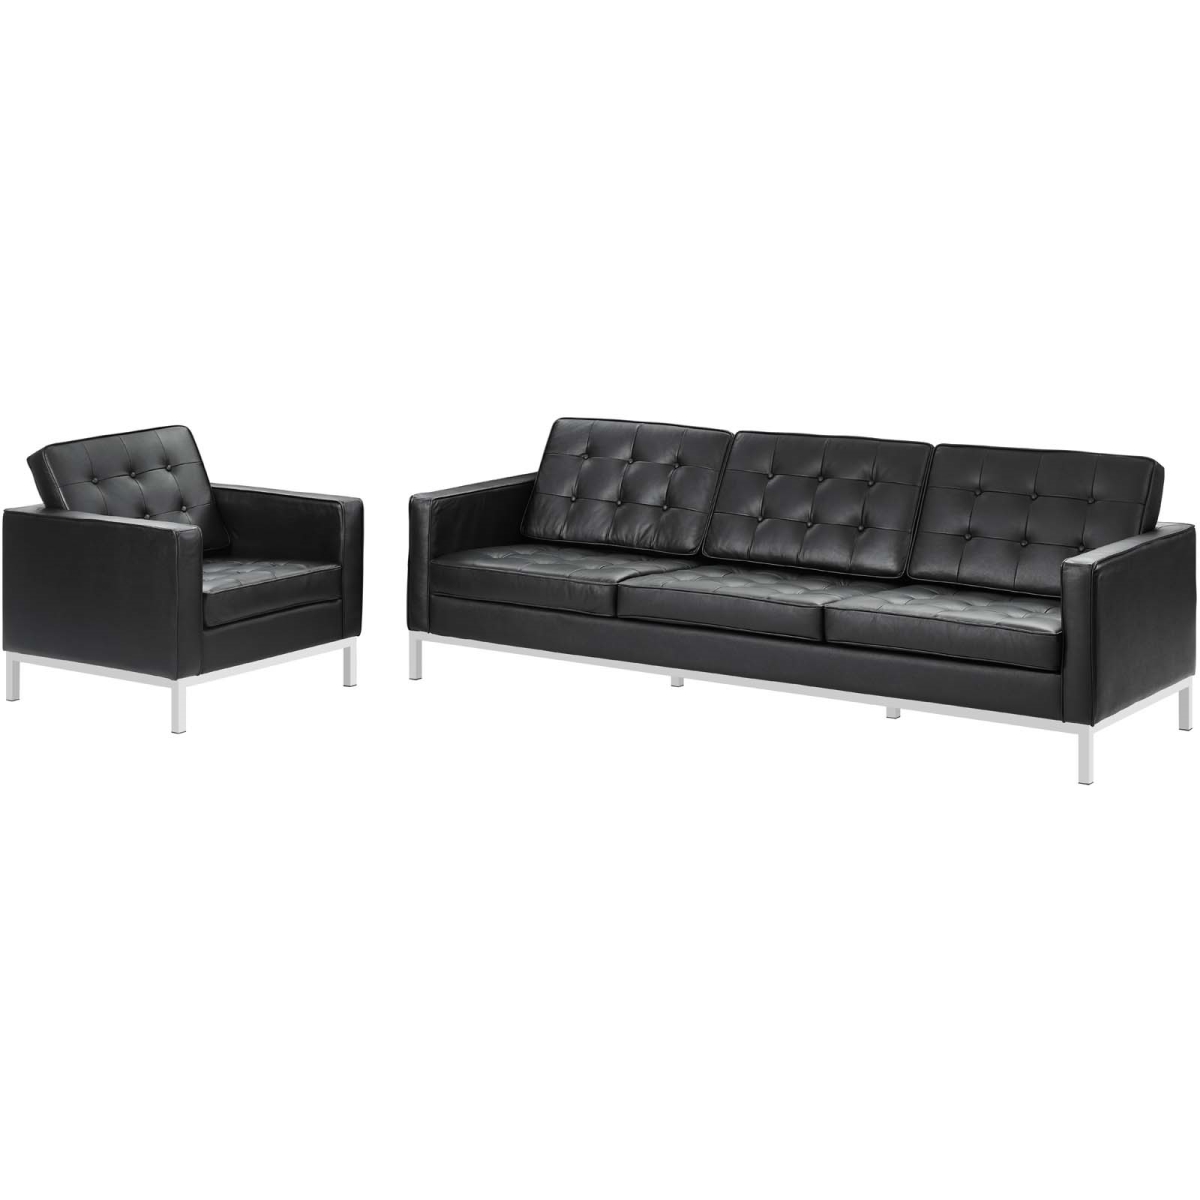 Eei-3099-blk-set Loft Leather Sofa & Armchair Set - Black, 2 Piece - 30.5 X 91 X 30.5 In.